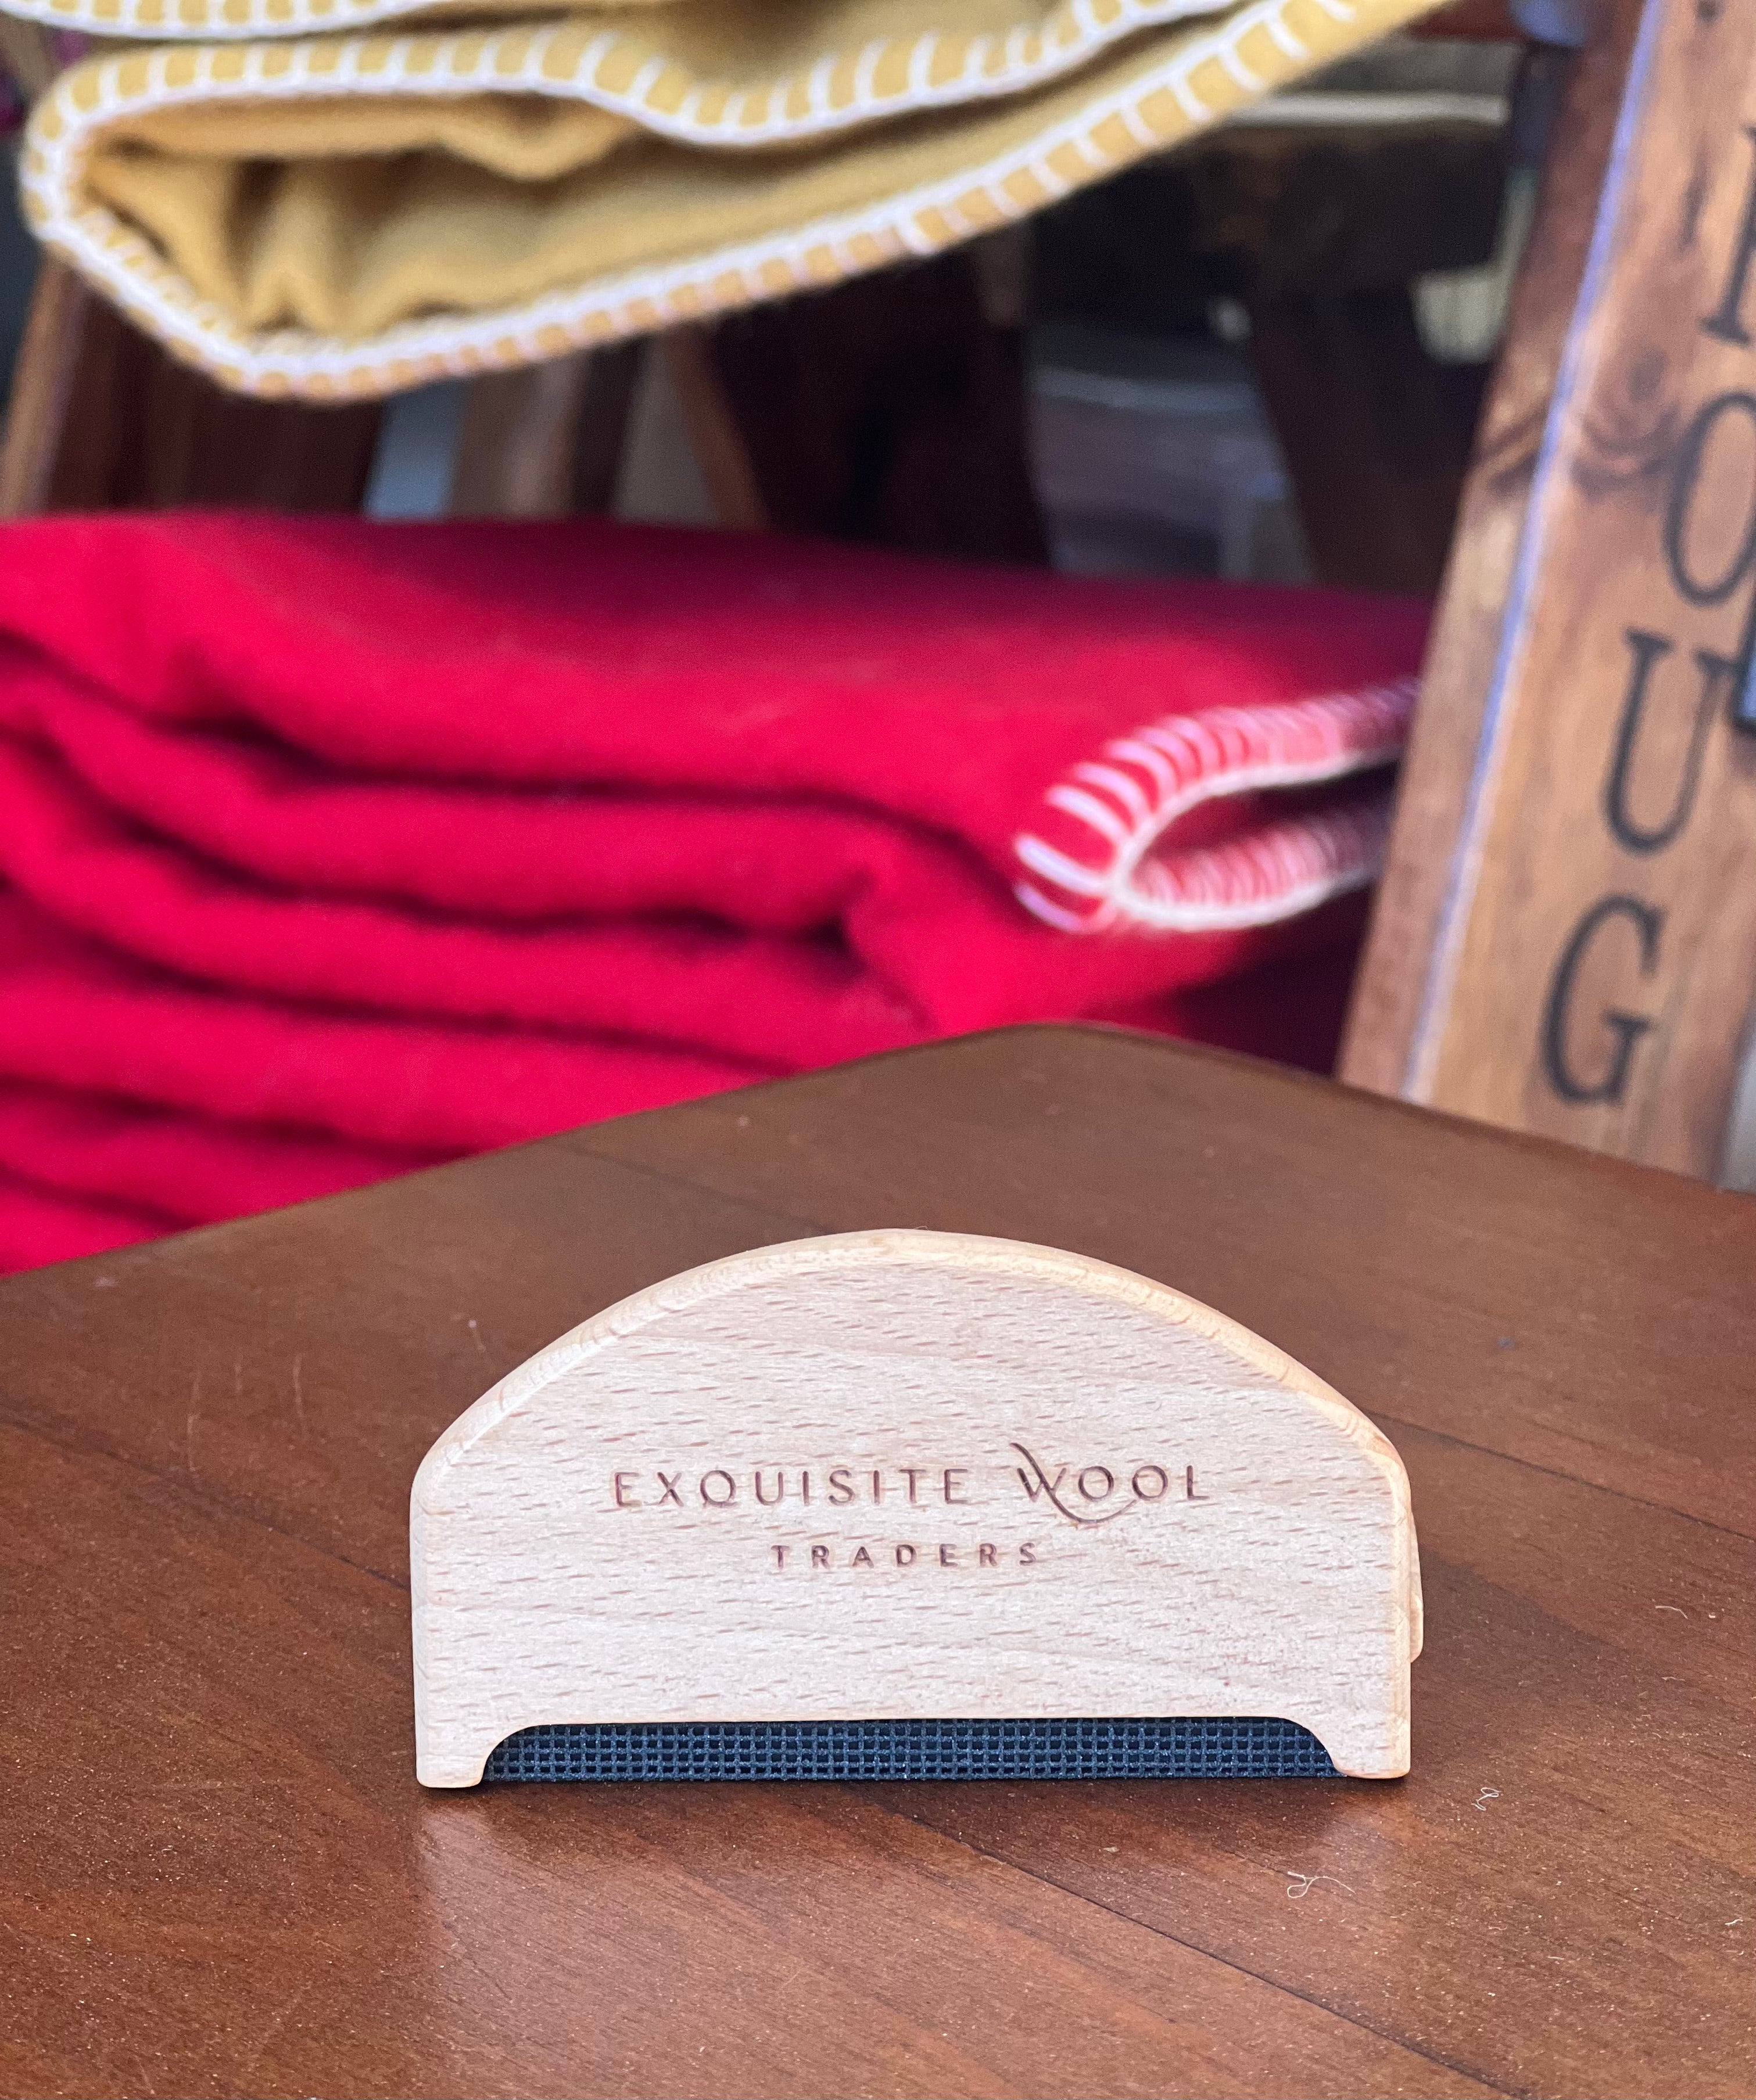 Wooden Wool Comb – Exquisite Wool Traders